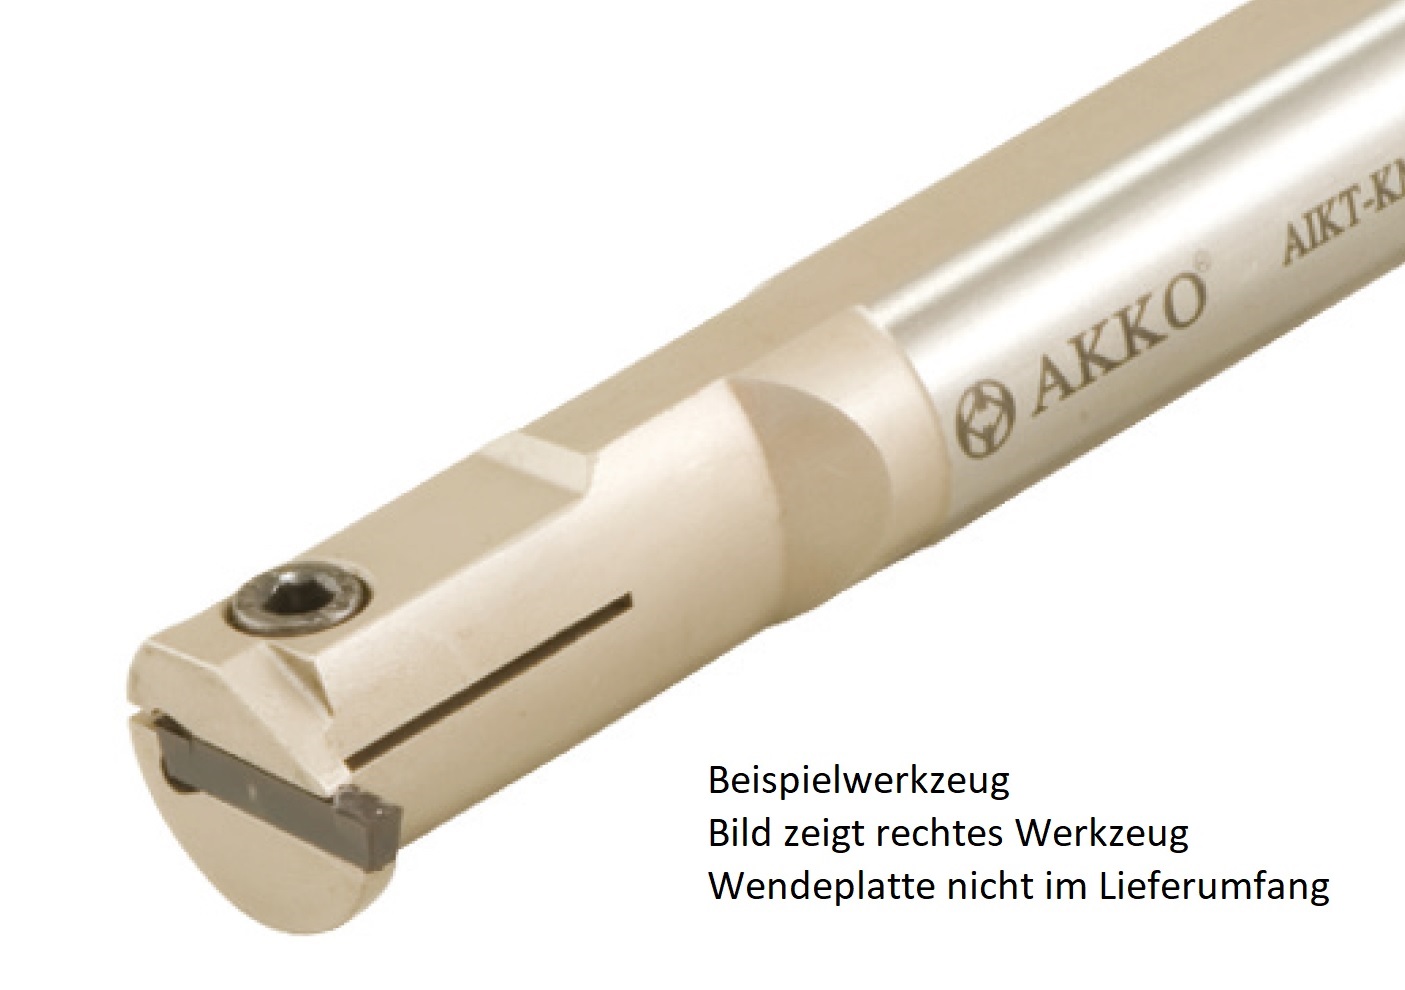 AKKO-Innen-Stechhalter, kompatibel mit Kennametal-Stechplatte A4.-3
Schaft-ø 20, ohne Innenkühlung, links